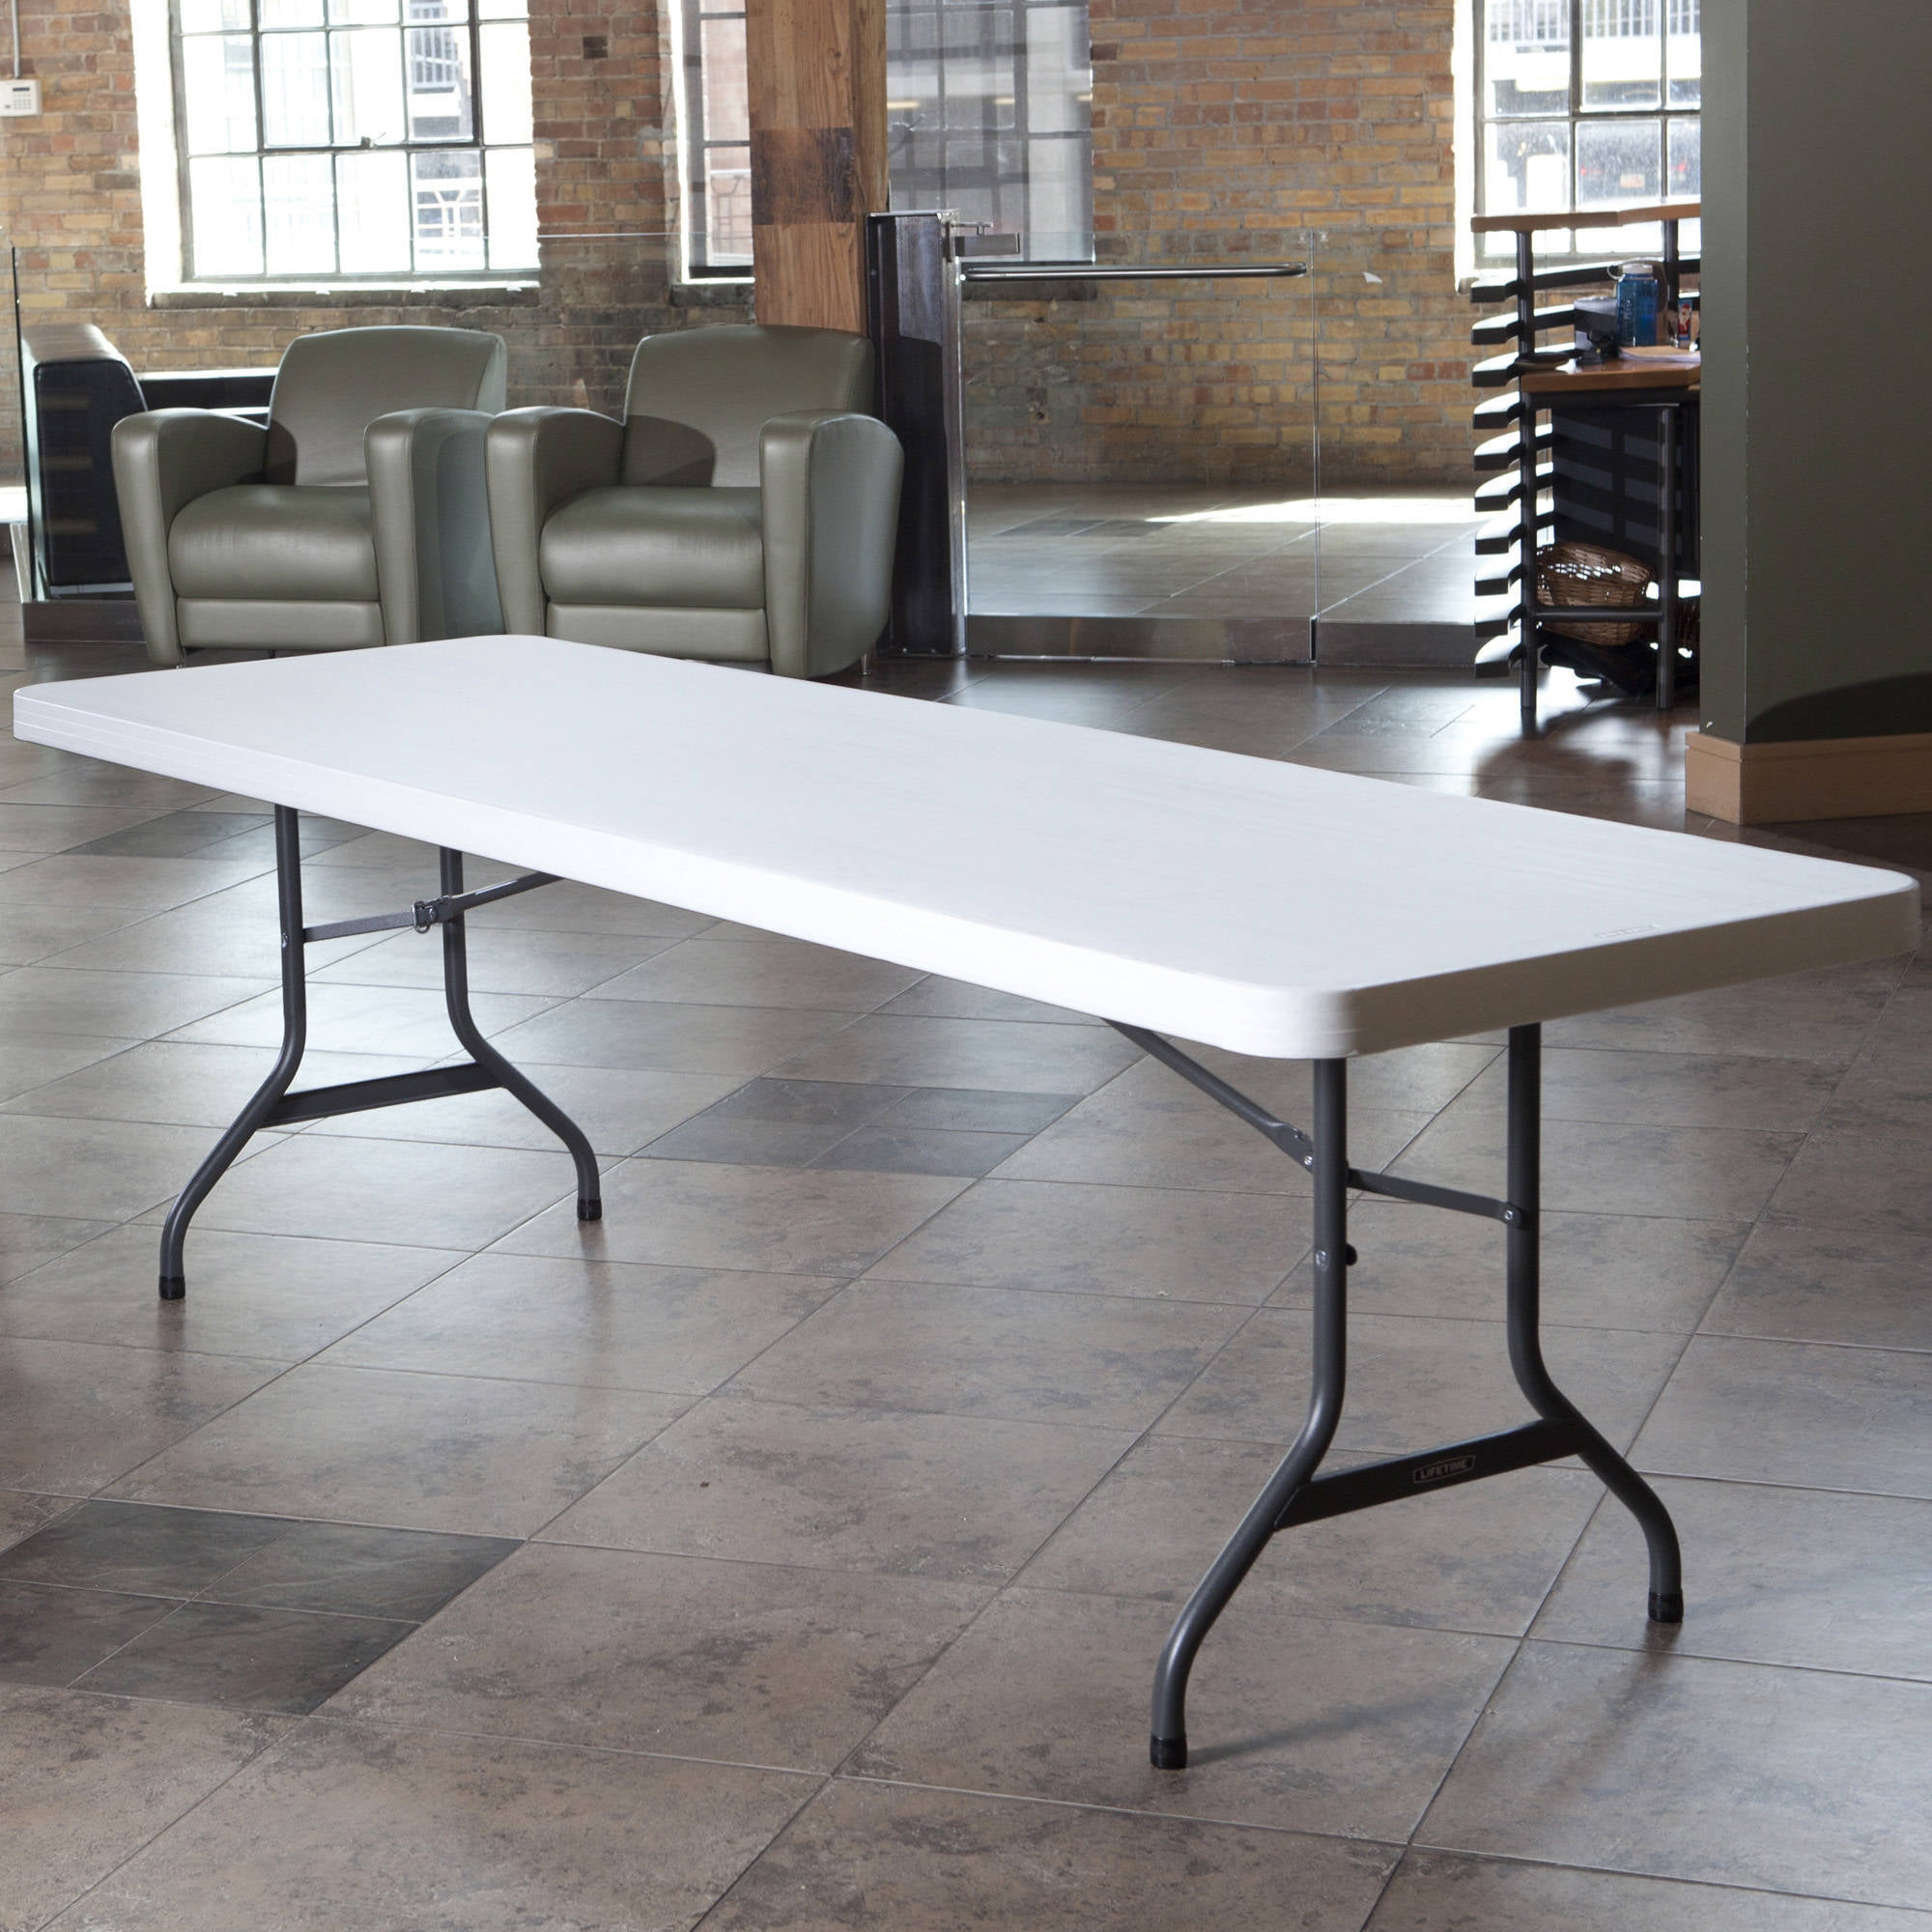 Lifetime 8Foot Commercial Folding Table White, 22980